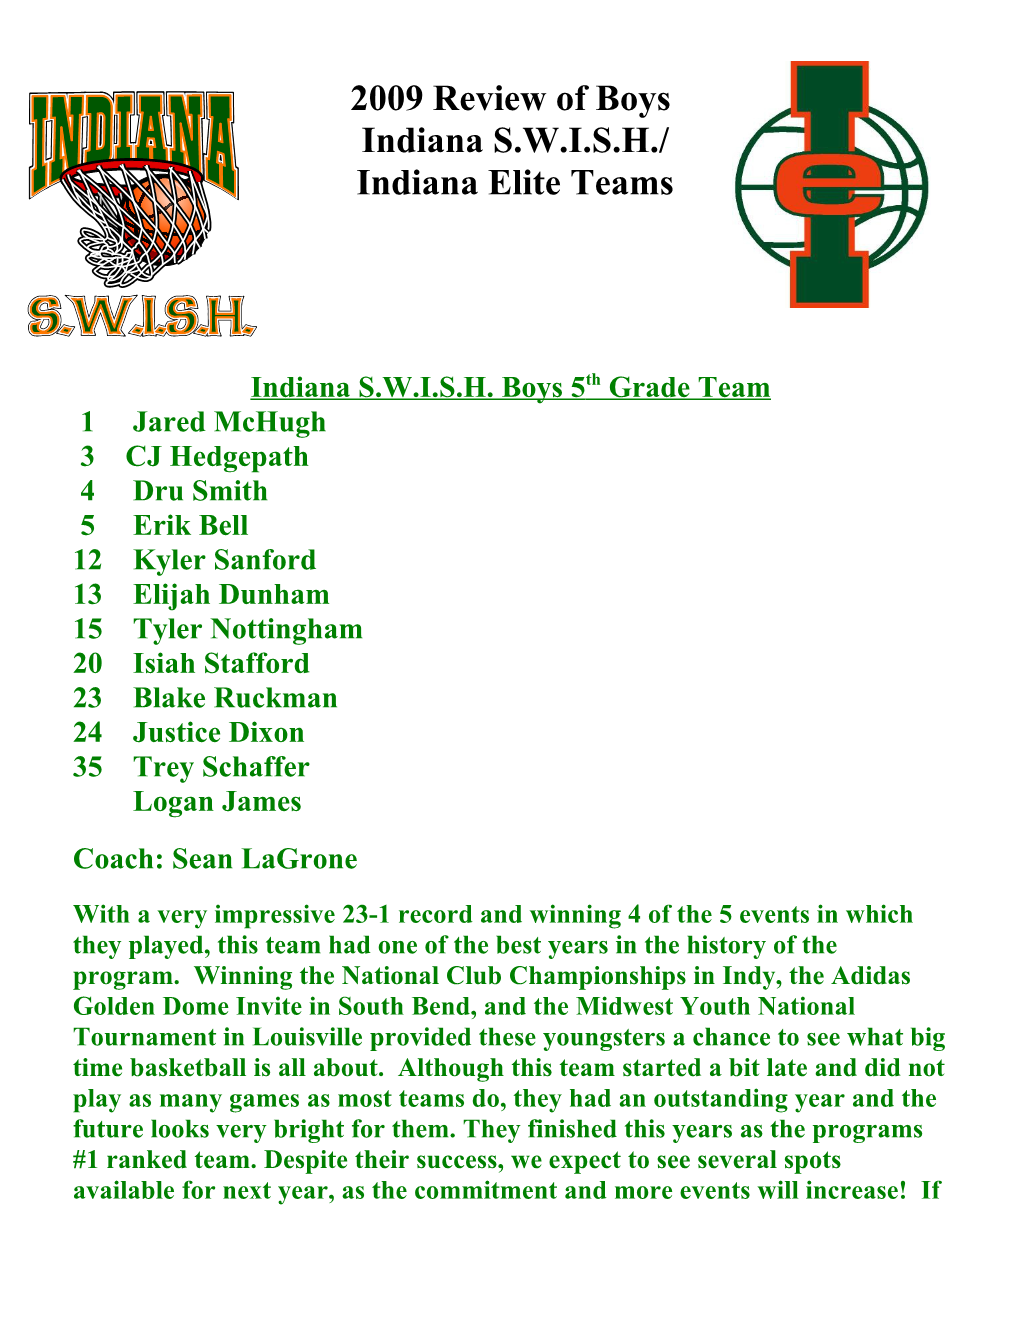 Indiana S.W.I.S.H. Boys 5Th Grade Team